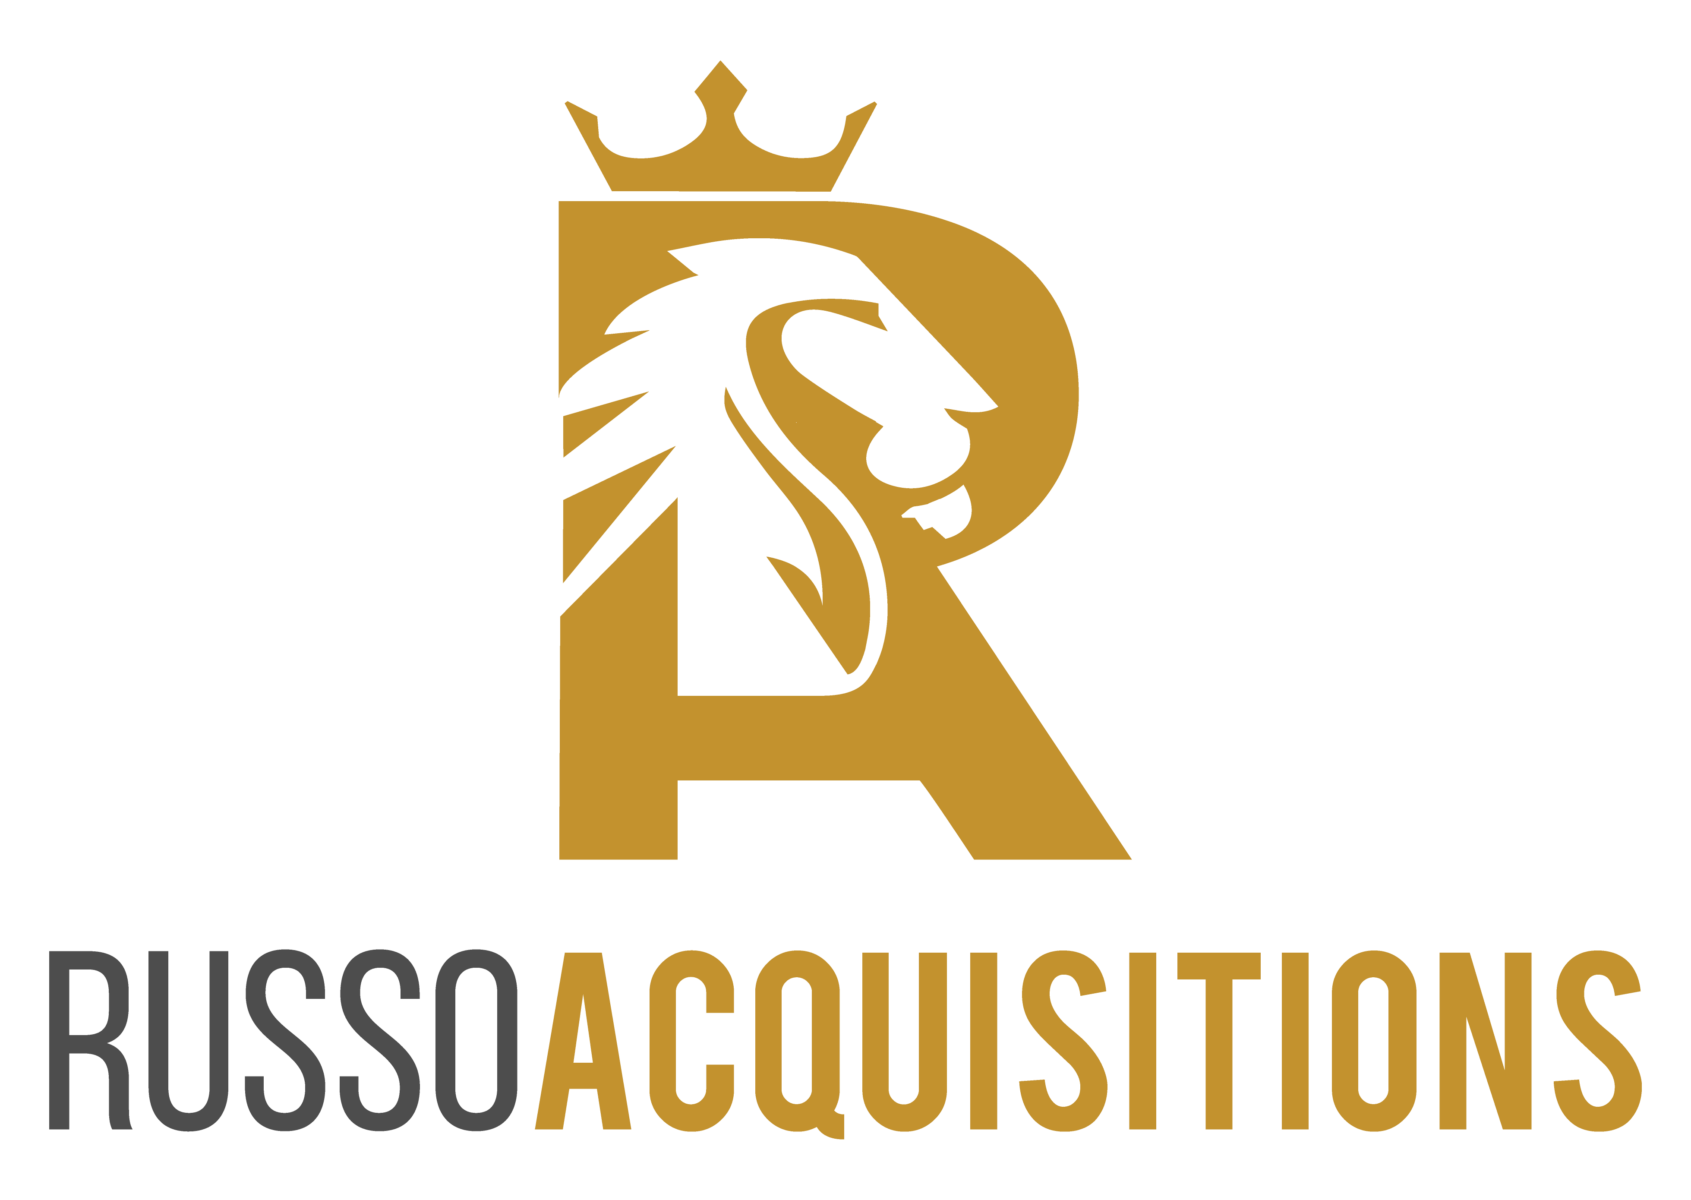 Russo Acquisitions  logo